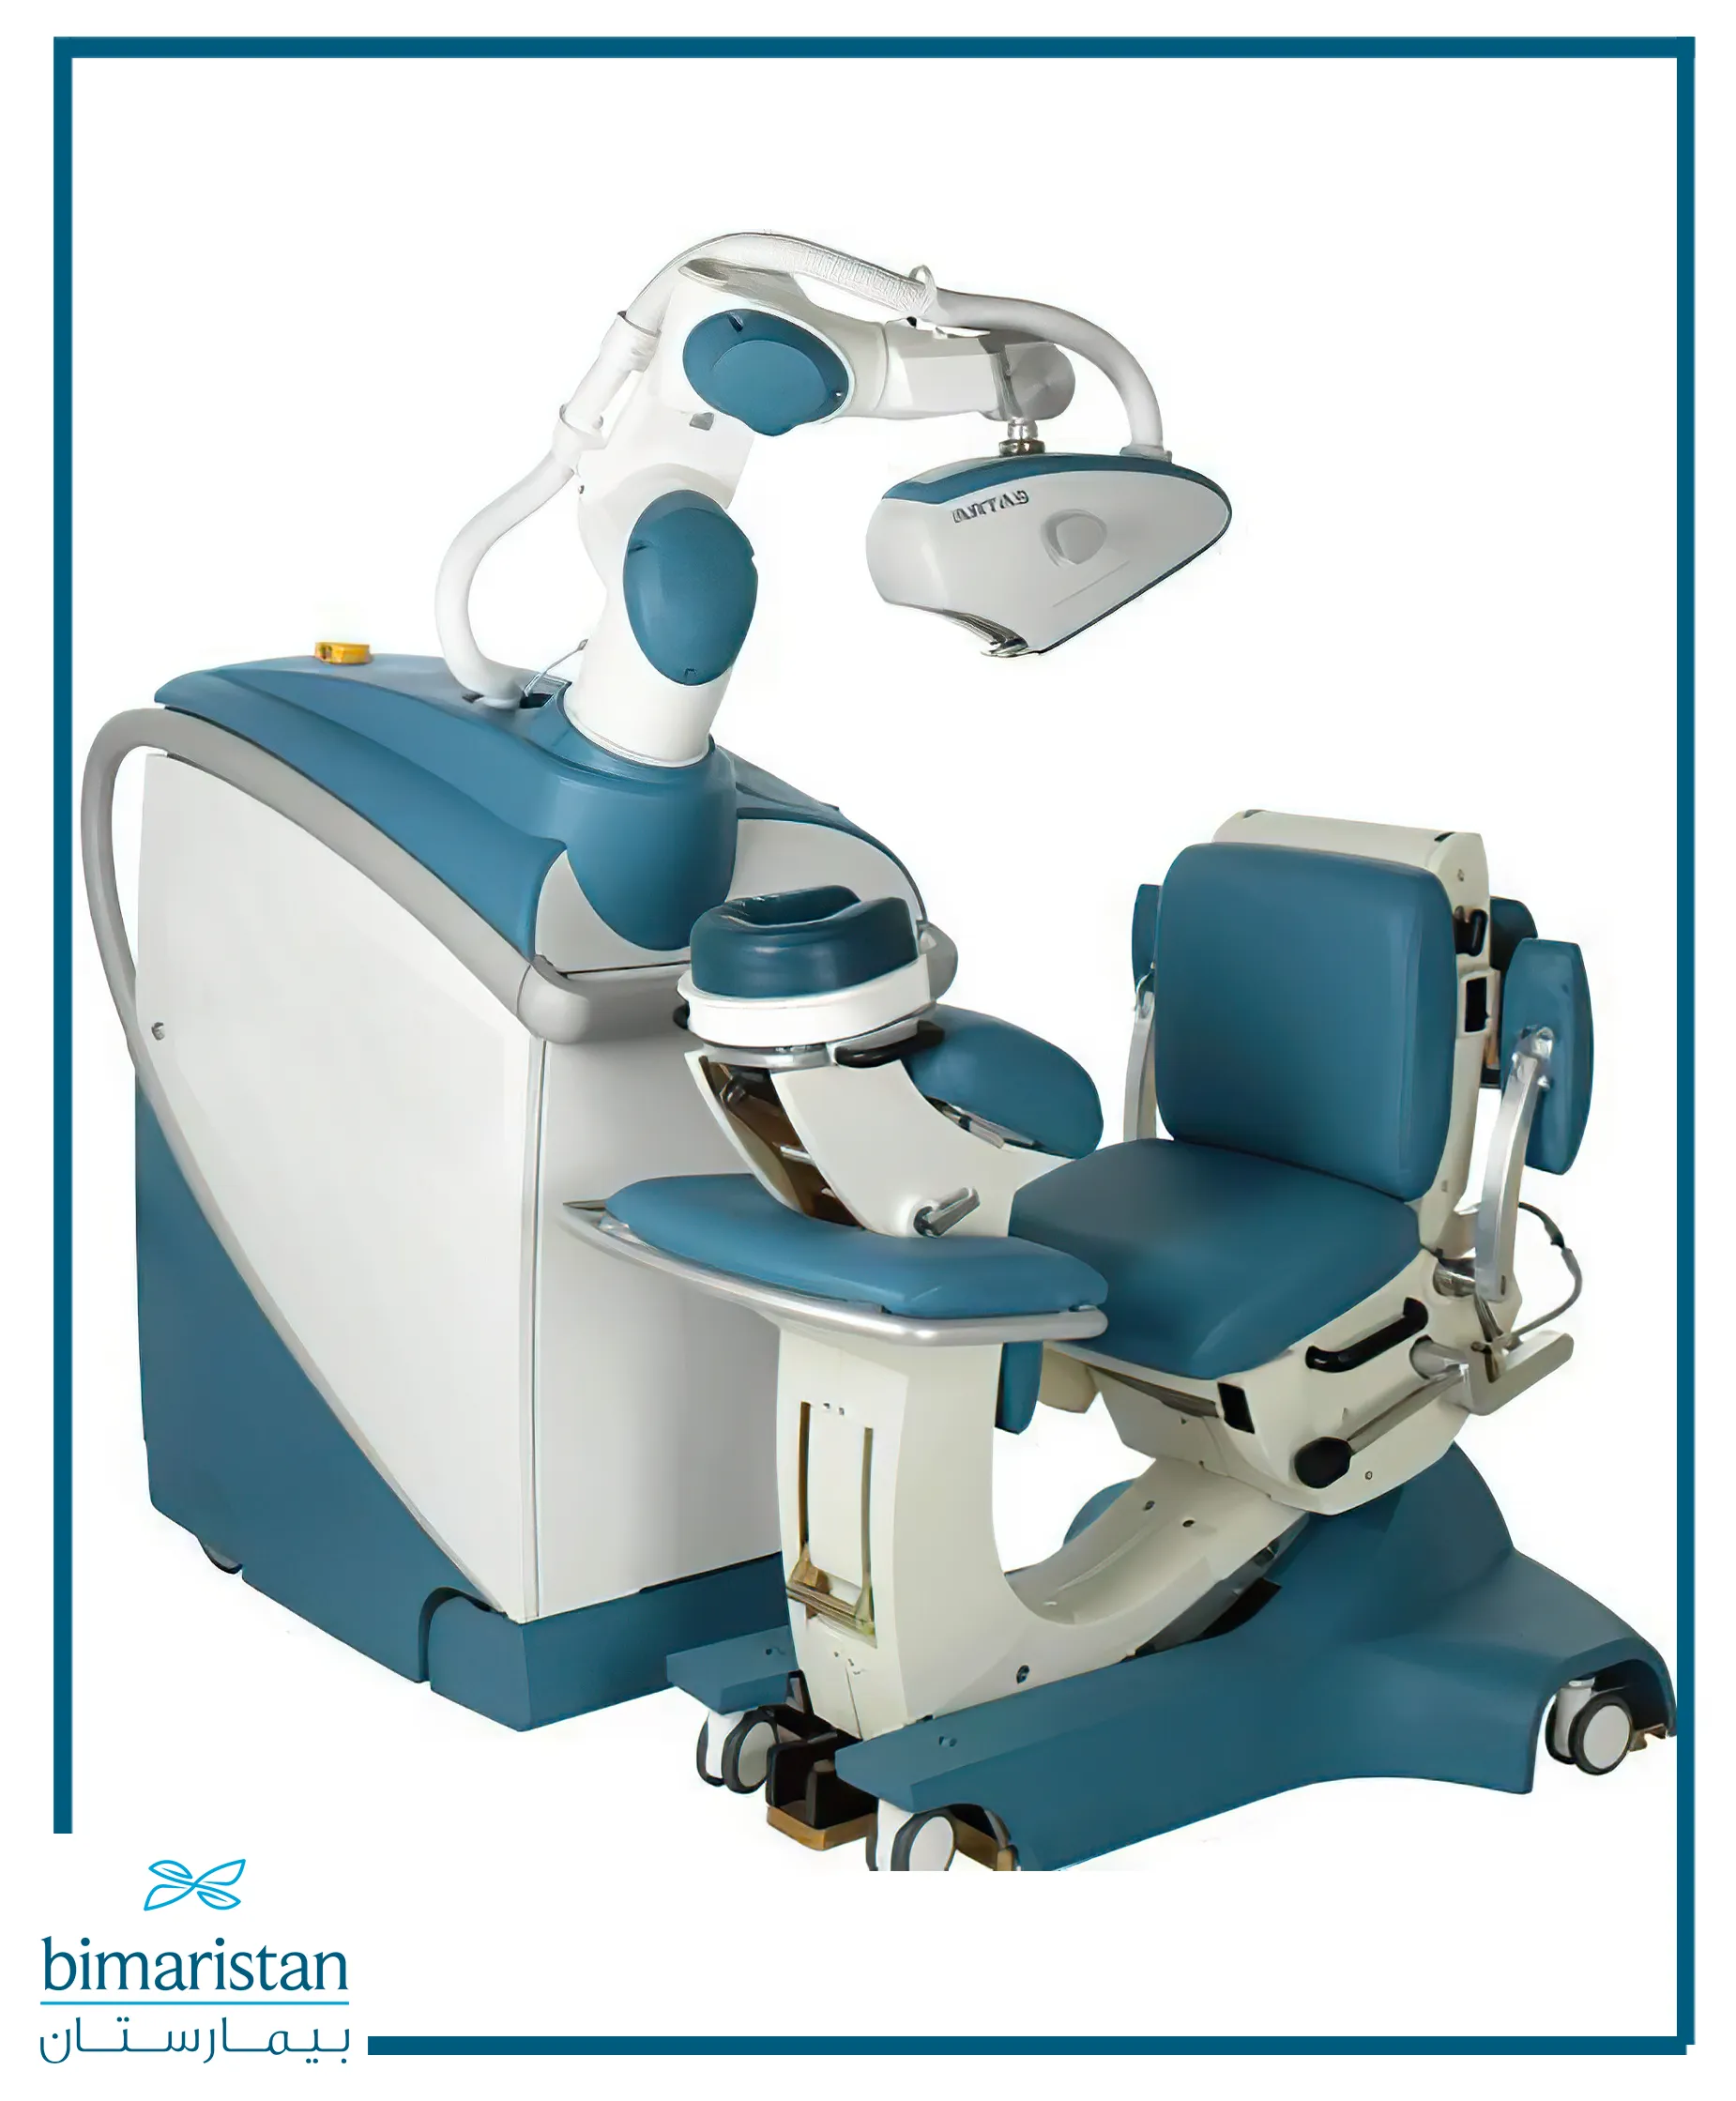 Hair Implant Robot Used In Hair Transplantation In Turkey.
